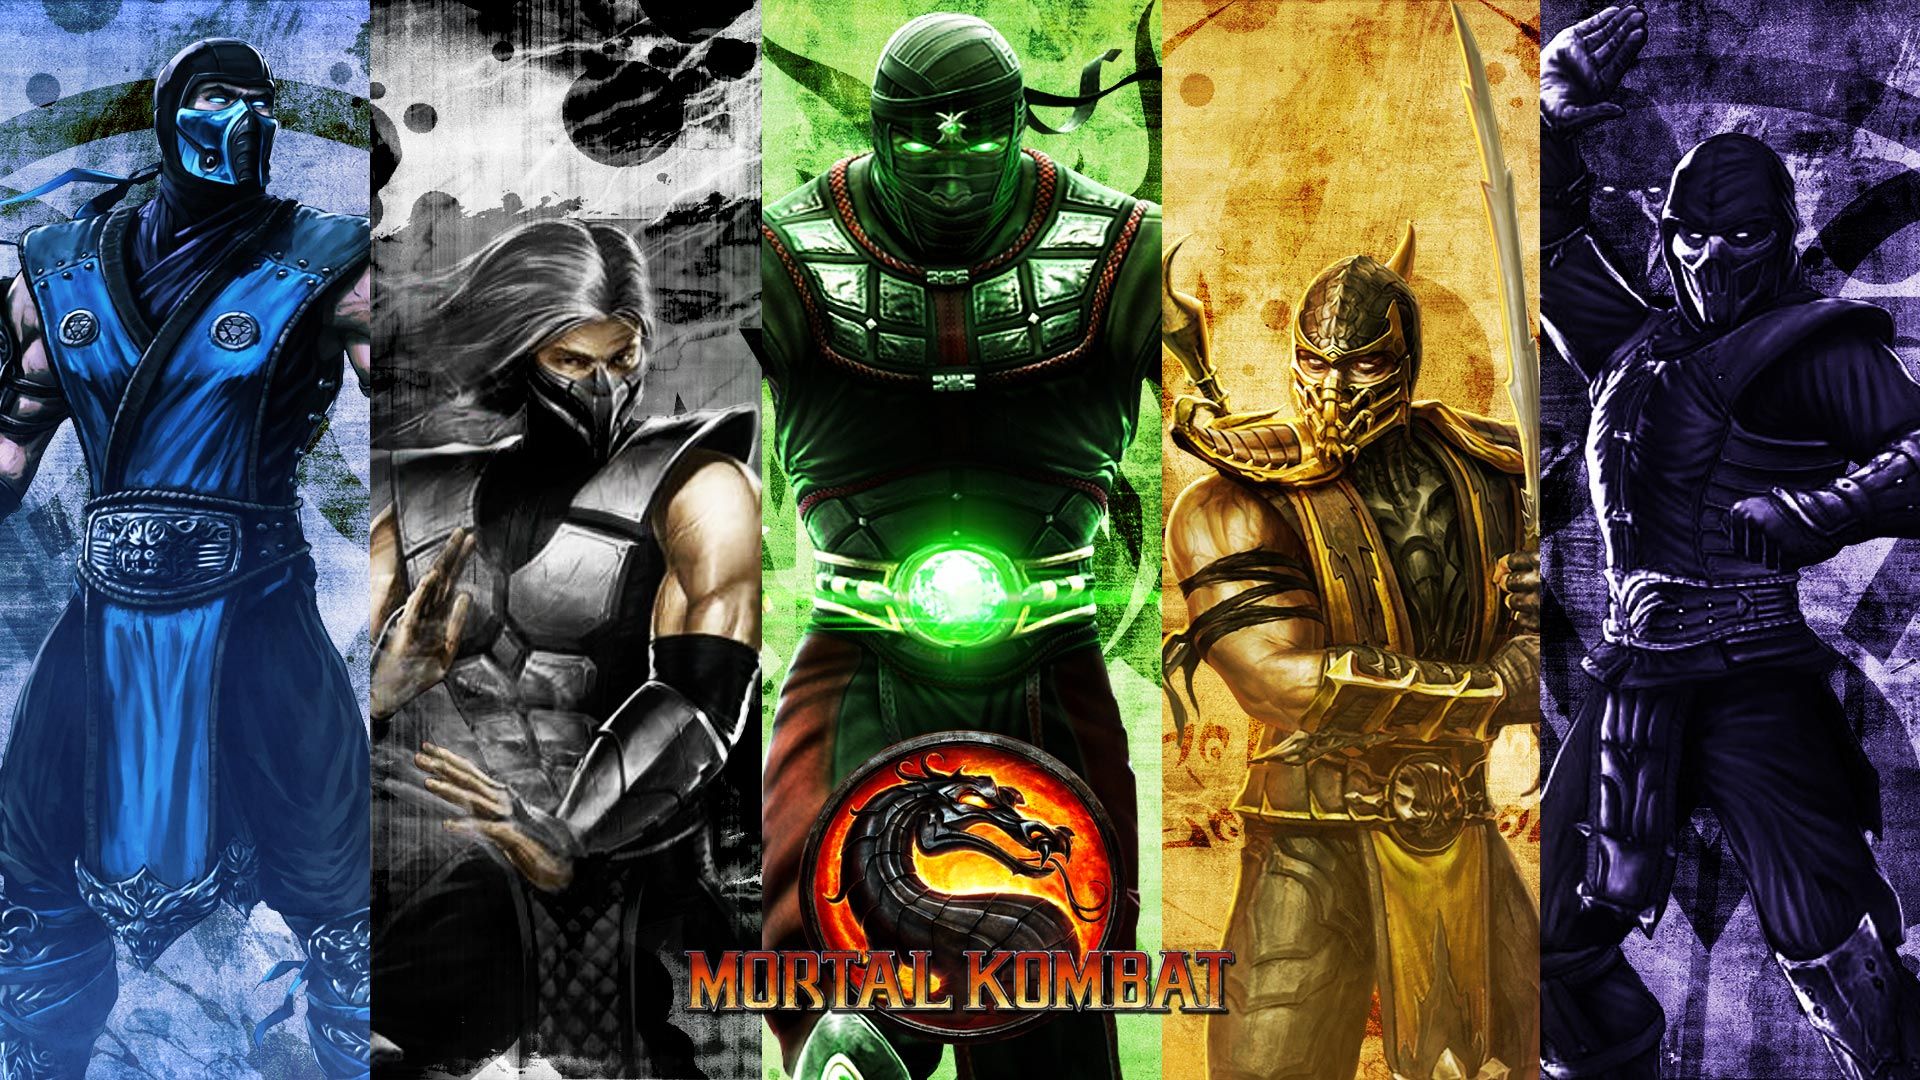 MK 9 Ninjas Widescreen Wallpaper Gamers Geek. Mortal Kombat, Mortal Kombat Mortal Combat